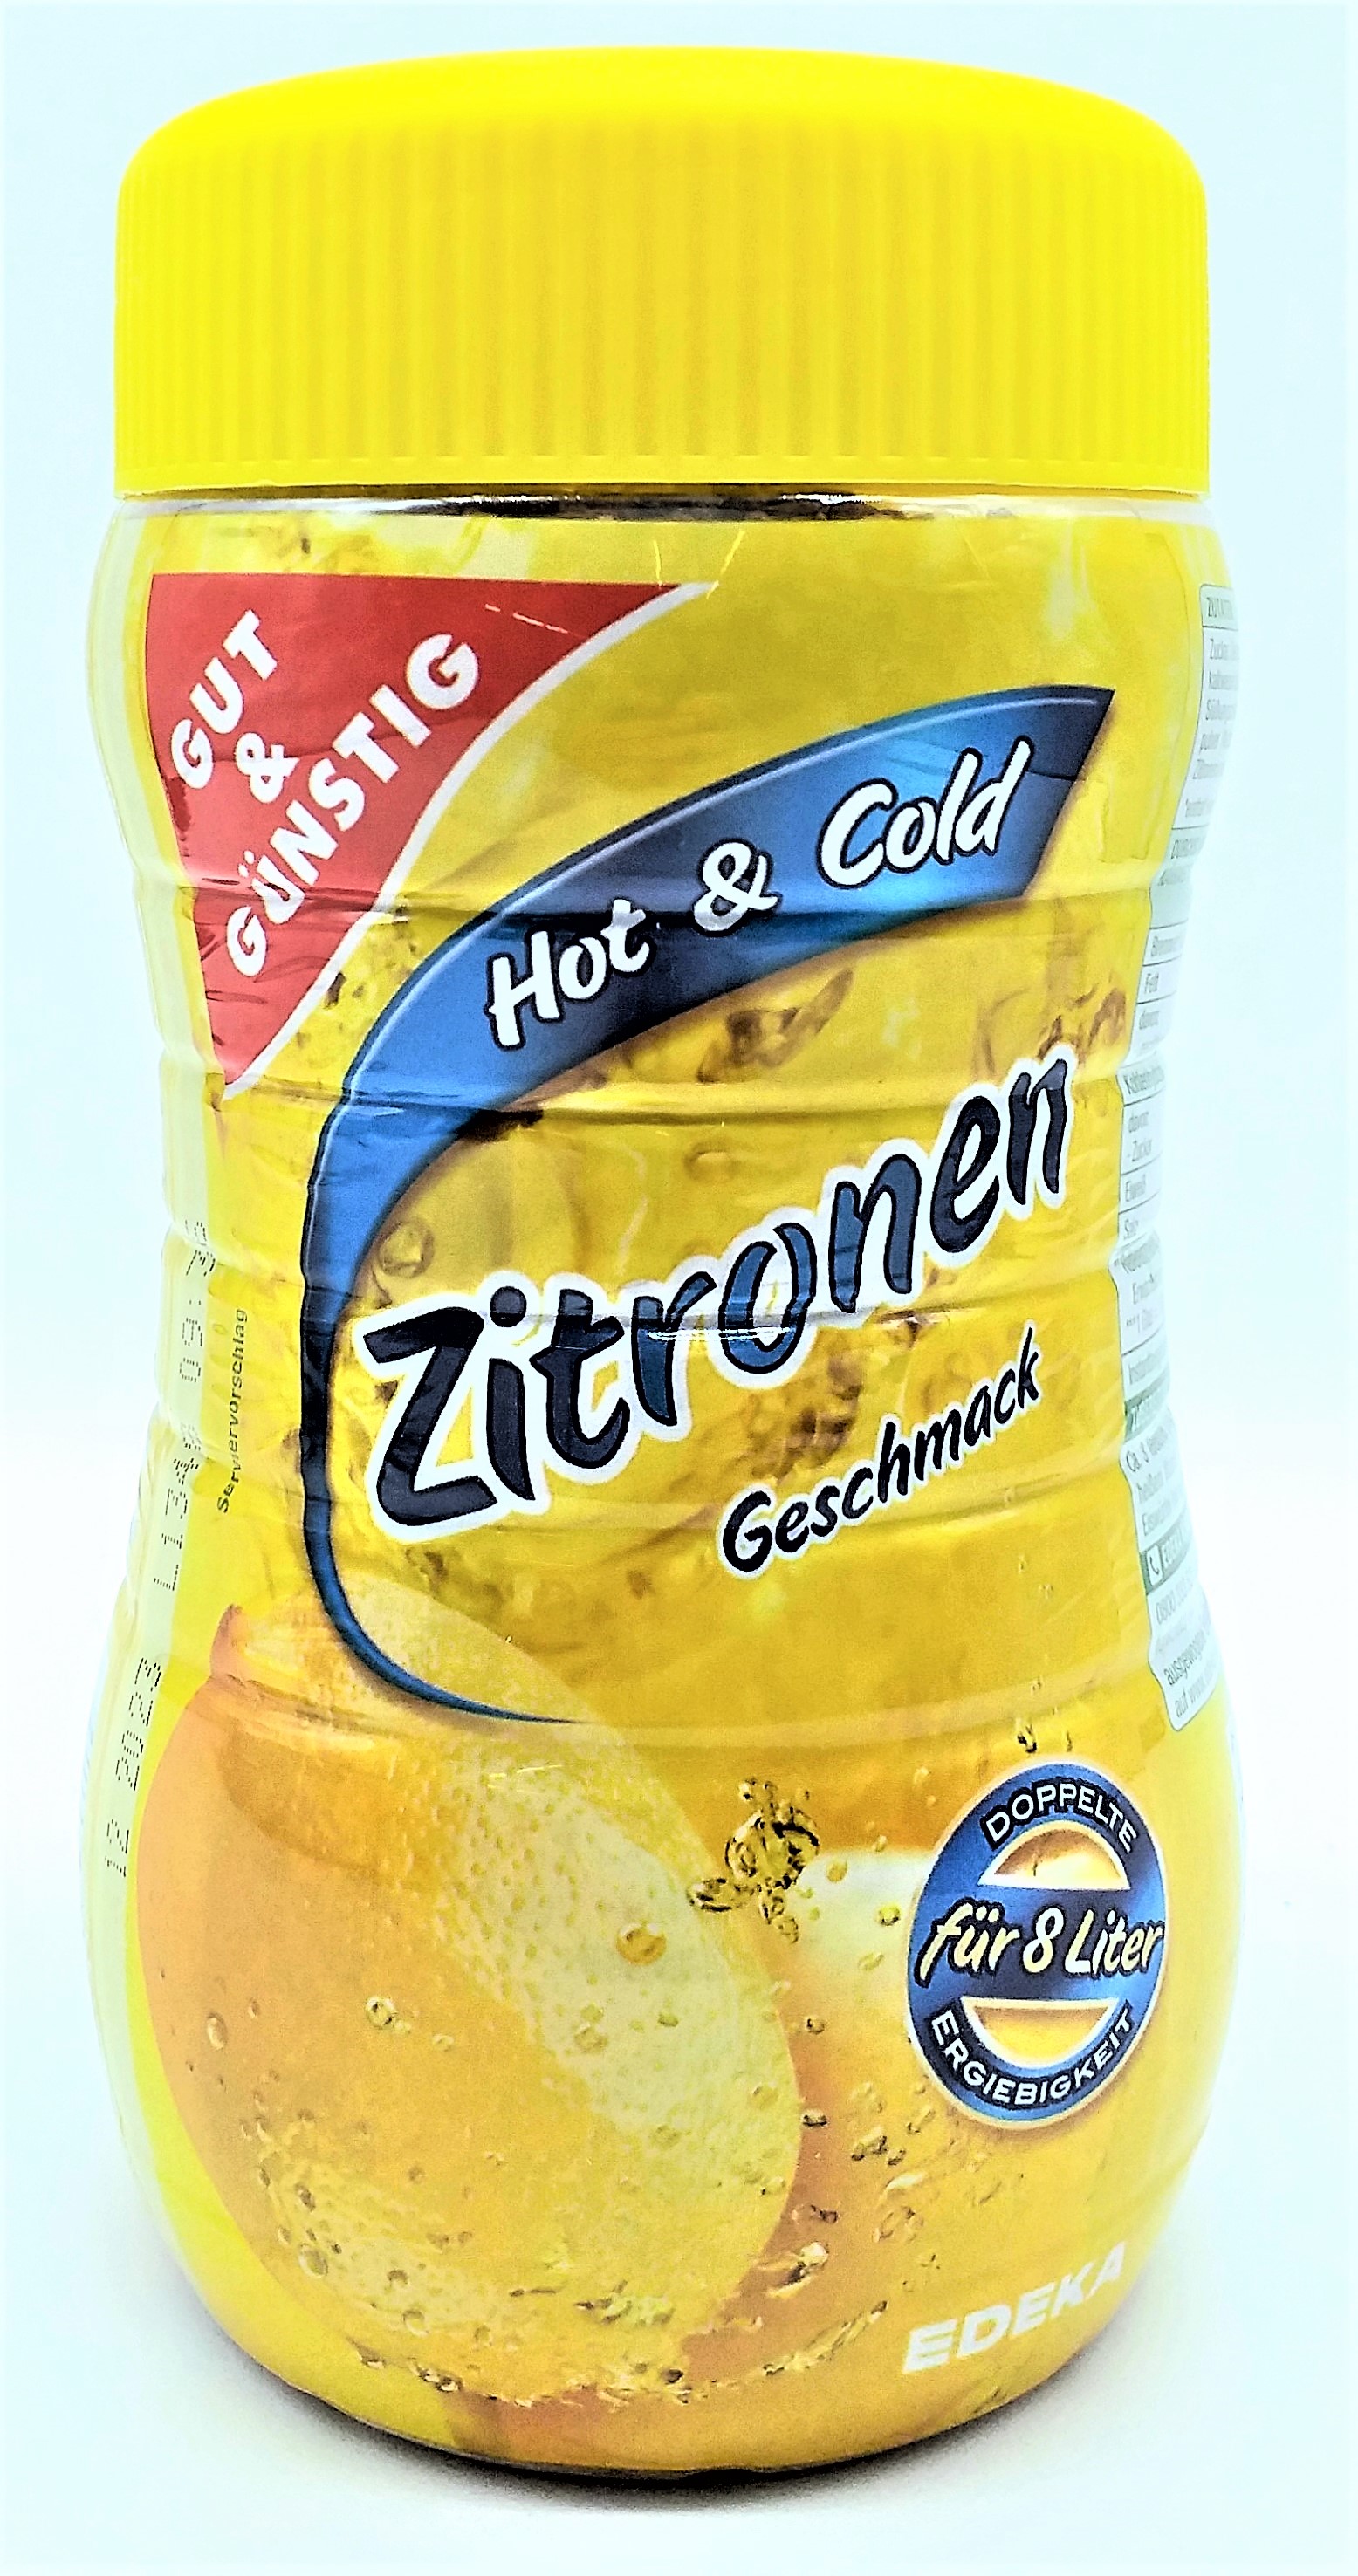 G&G Zitrone Teegetränk Dose 400g